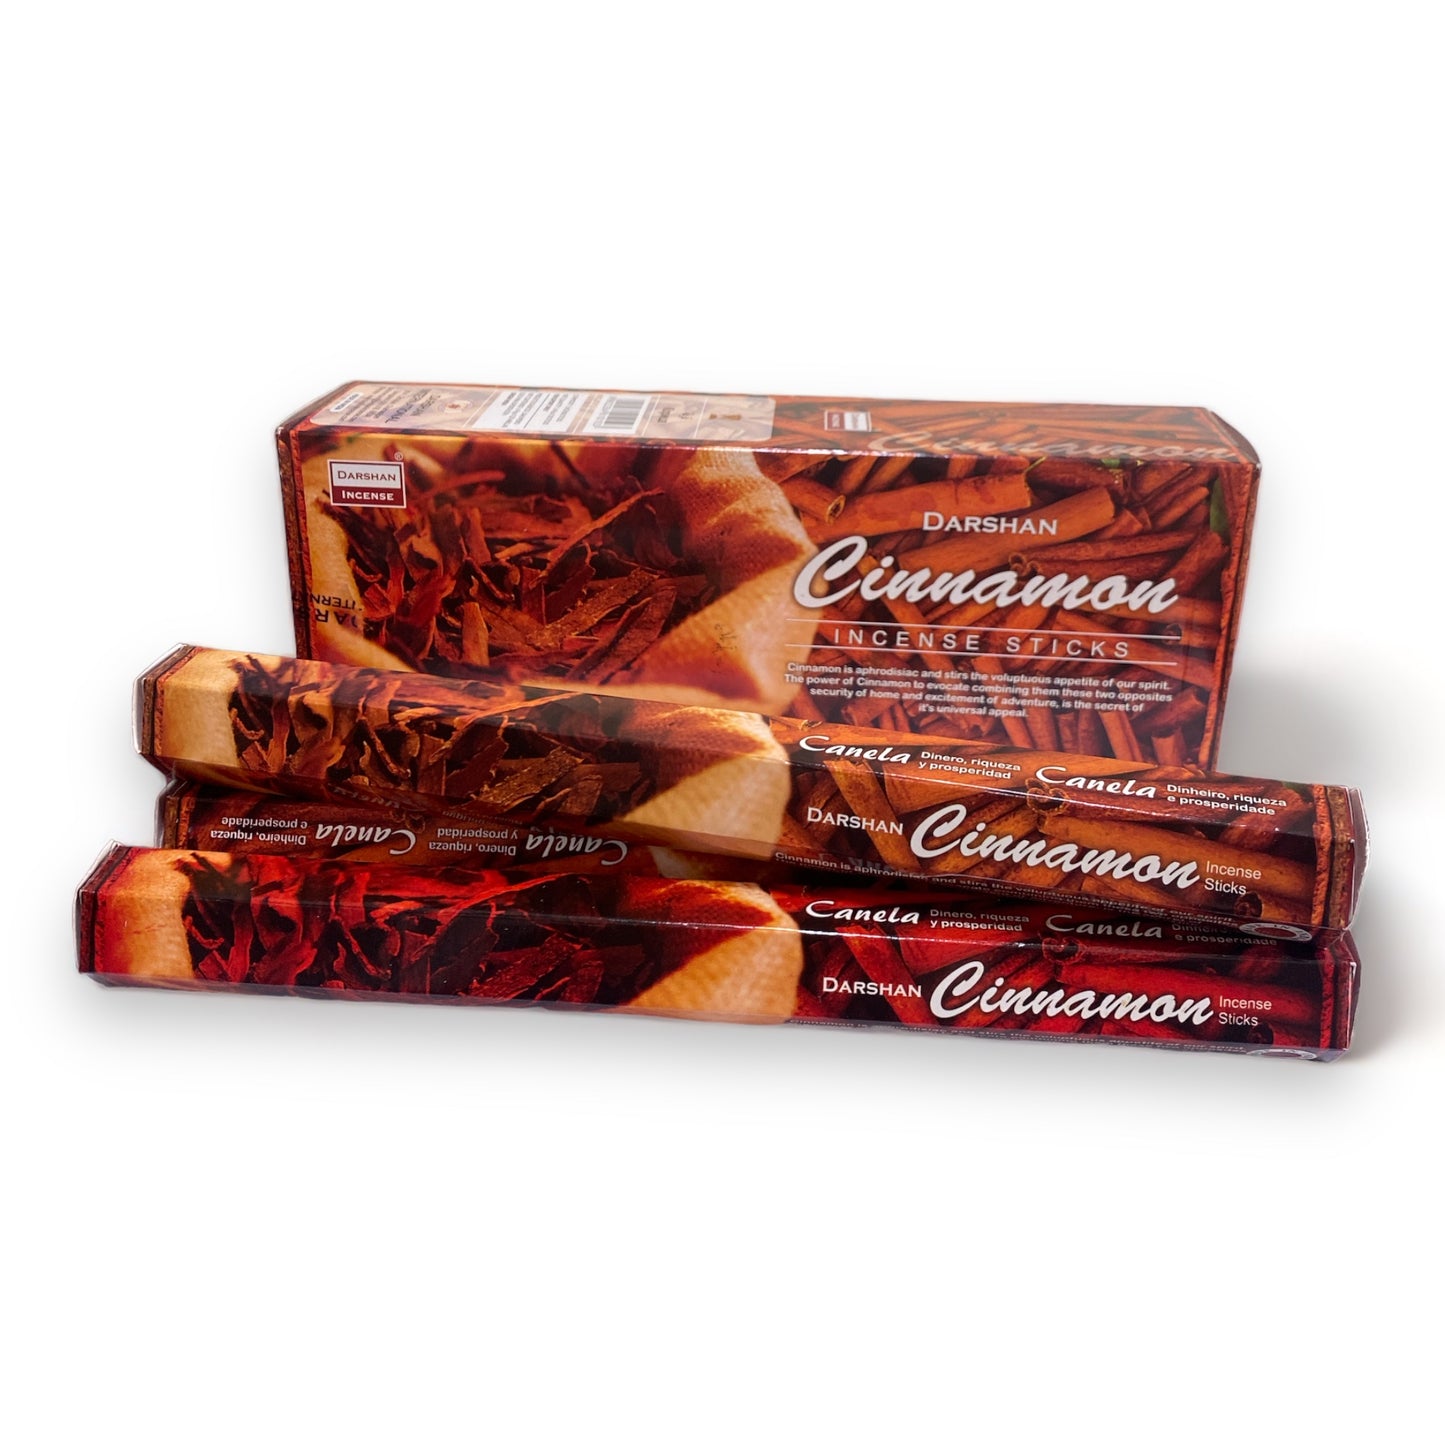 Cinnamon Incense Sticks - Box of 6 Tubes - by Darshan